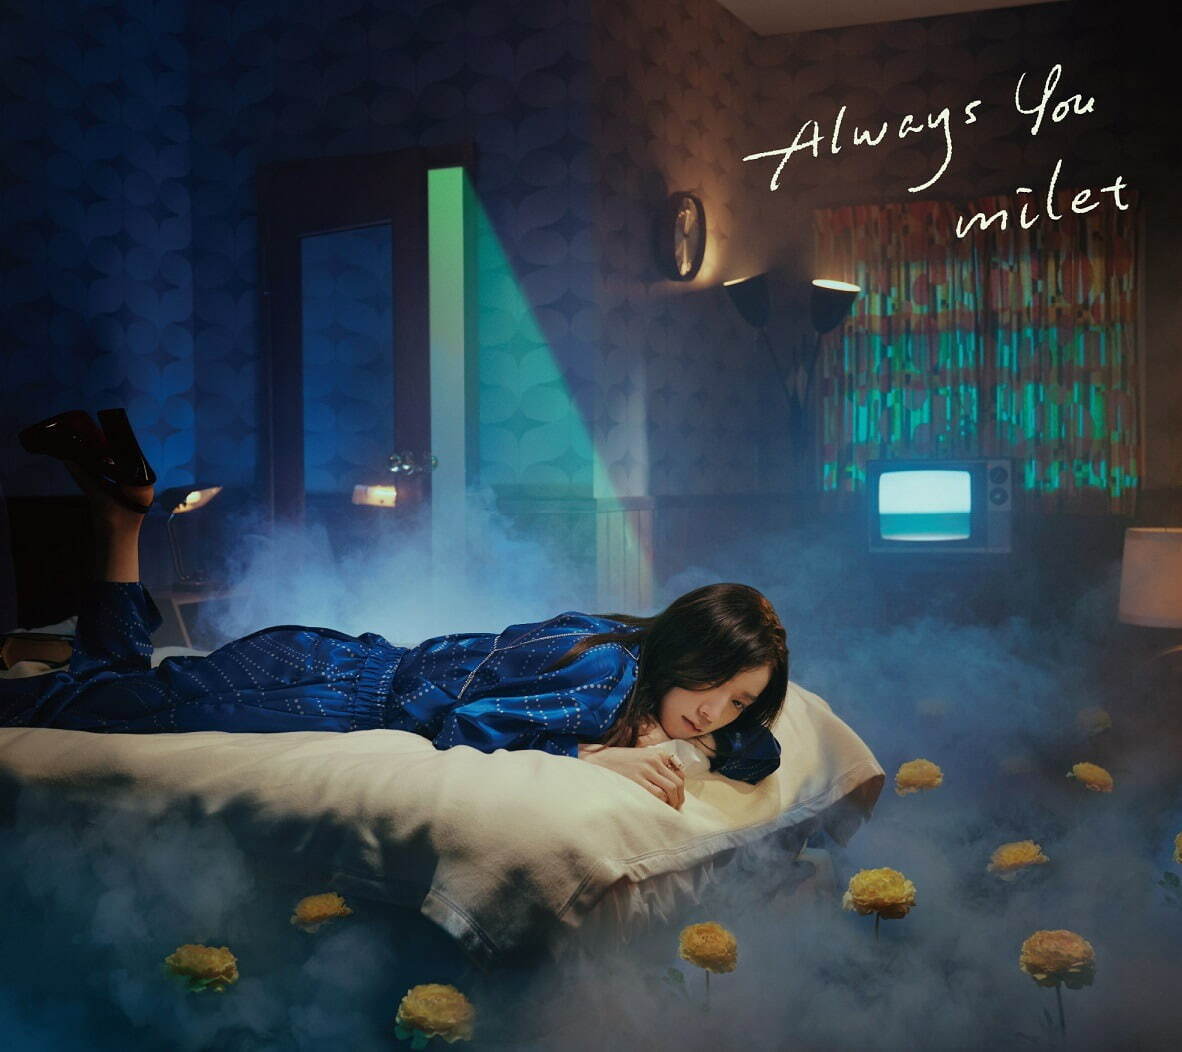 milet 新曲「Always You」 初回生産限定盤 1,700円